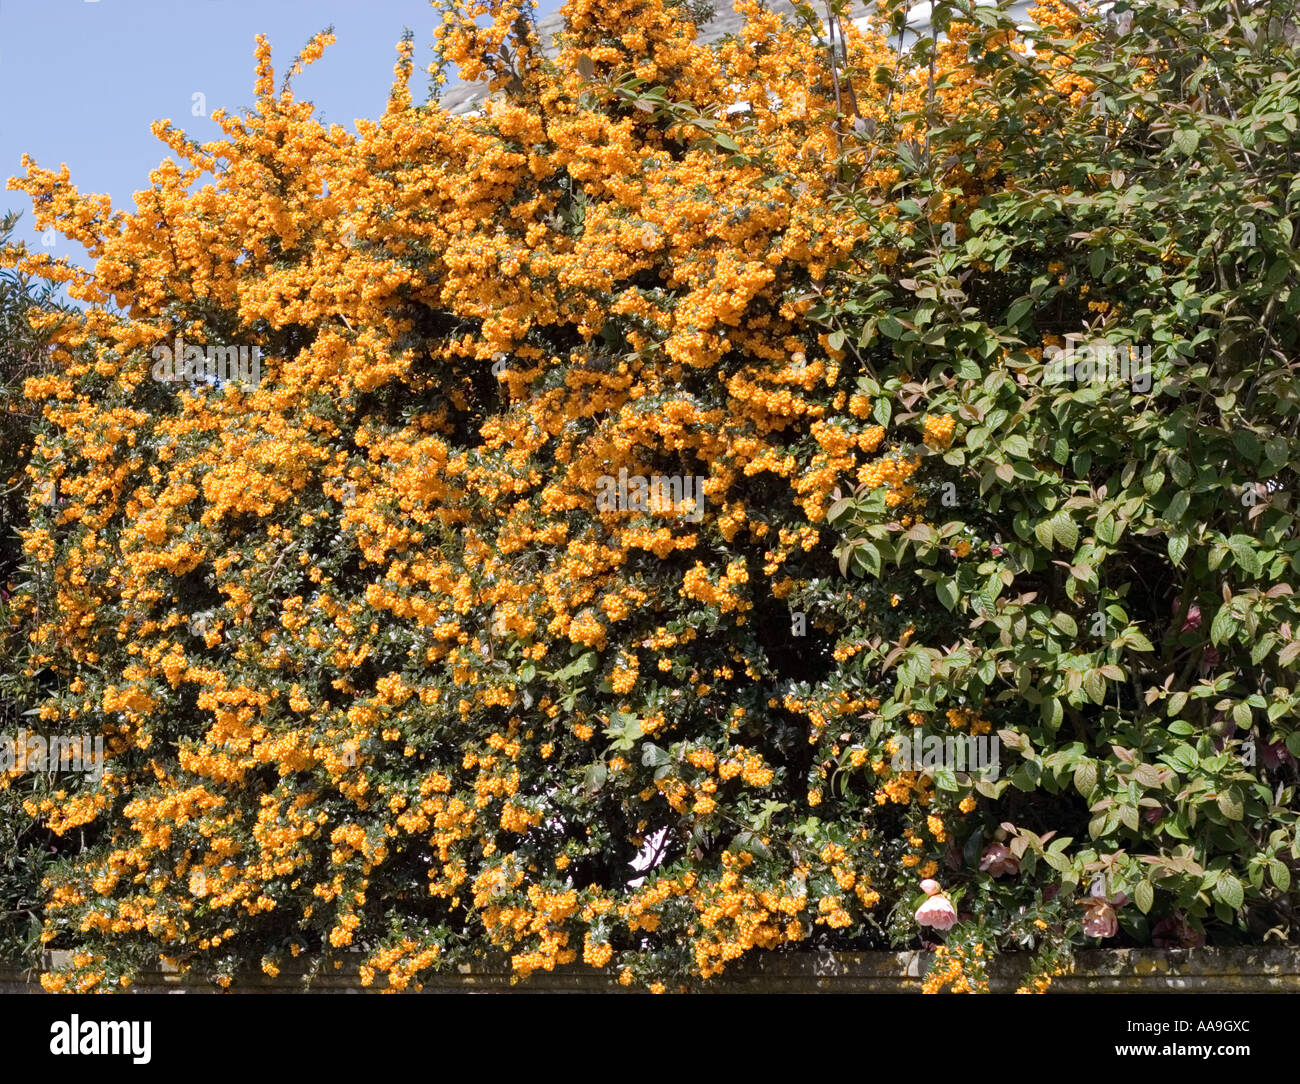 Pyracantha bush Stock Photo